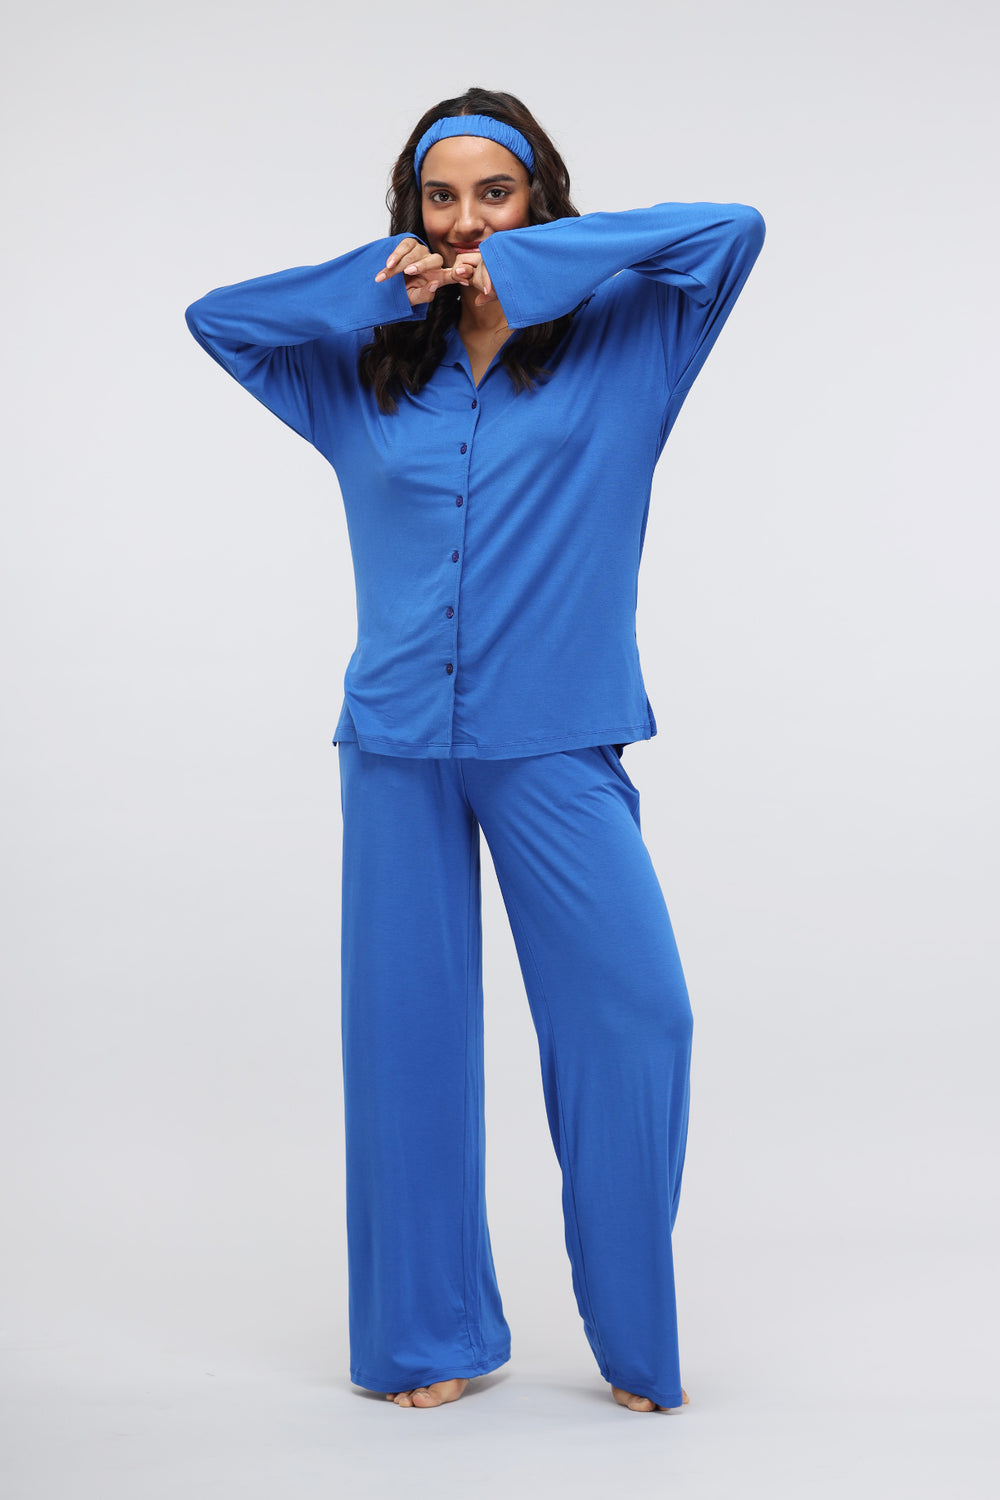 Flared Modal Pajama Set with Long Lounge top